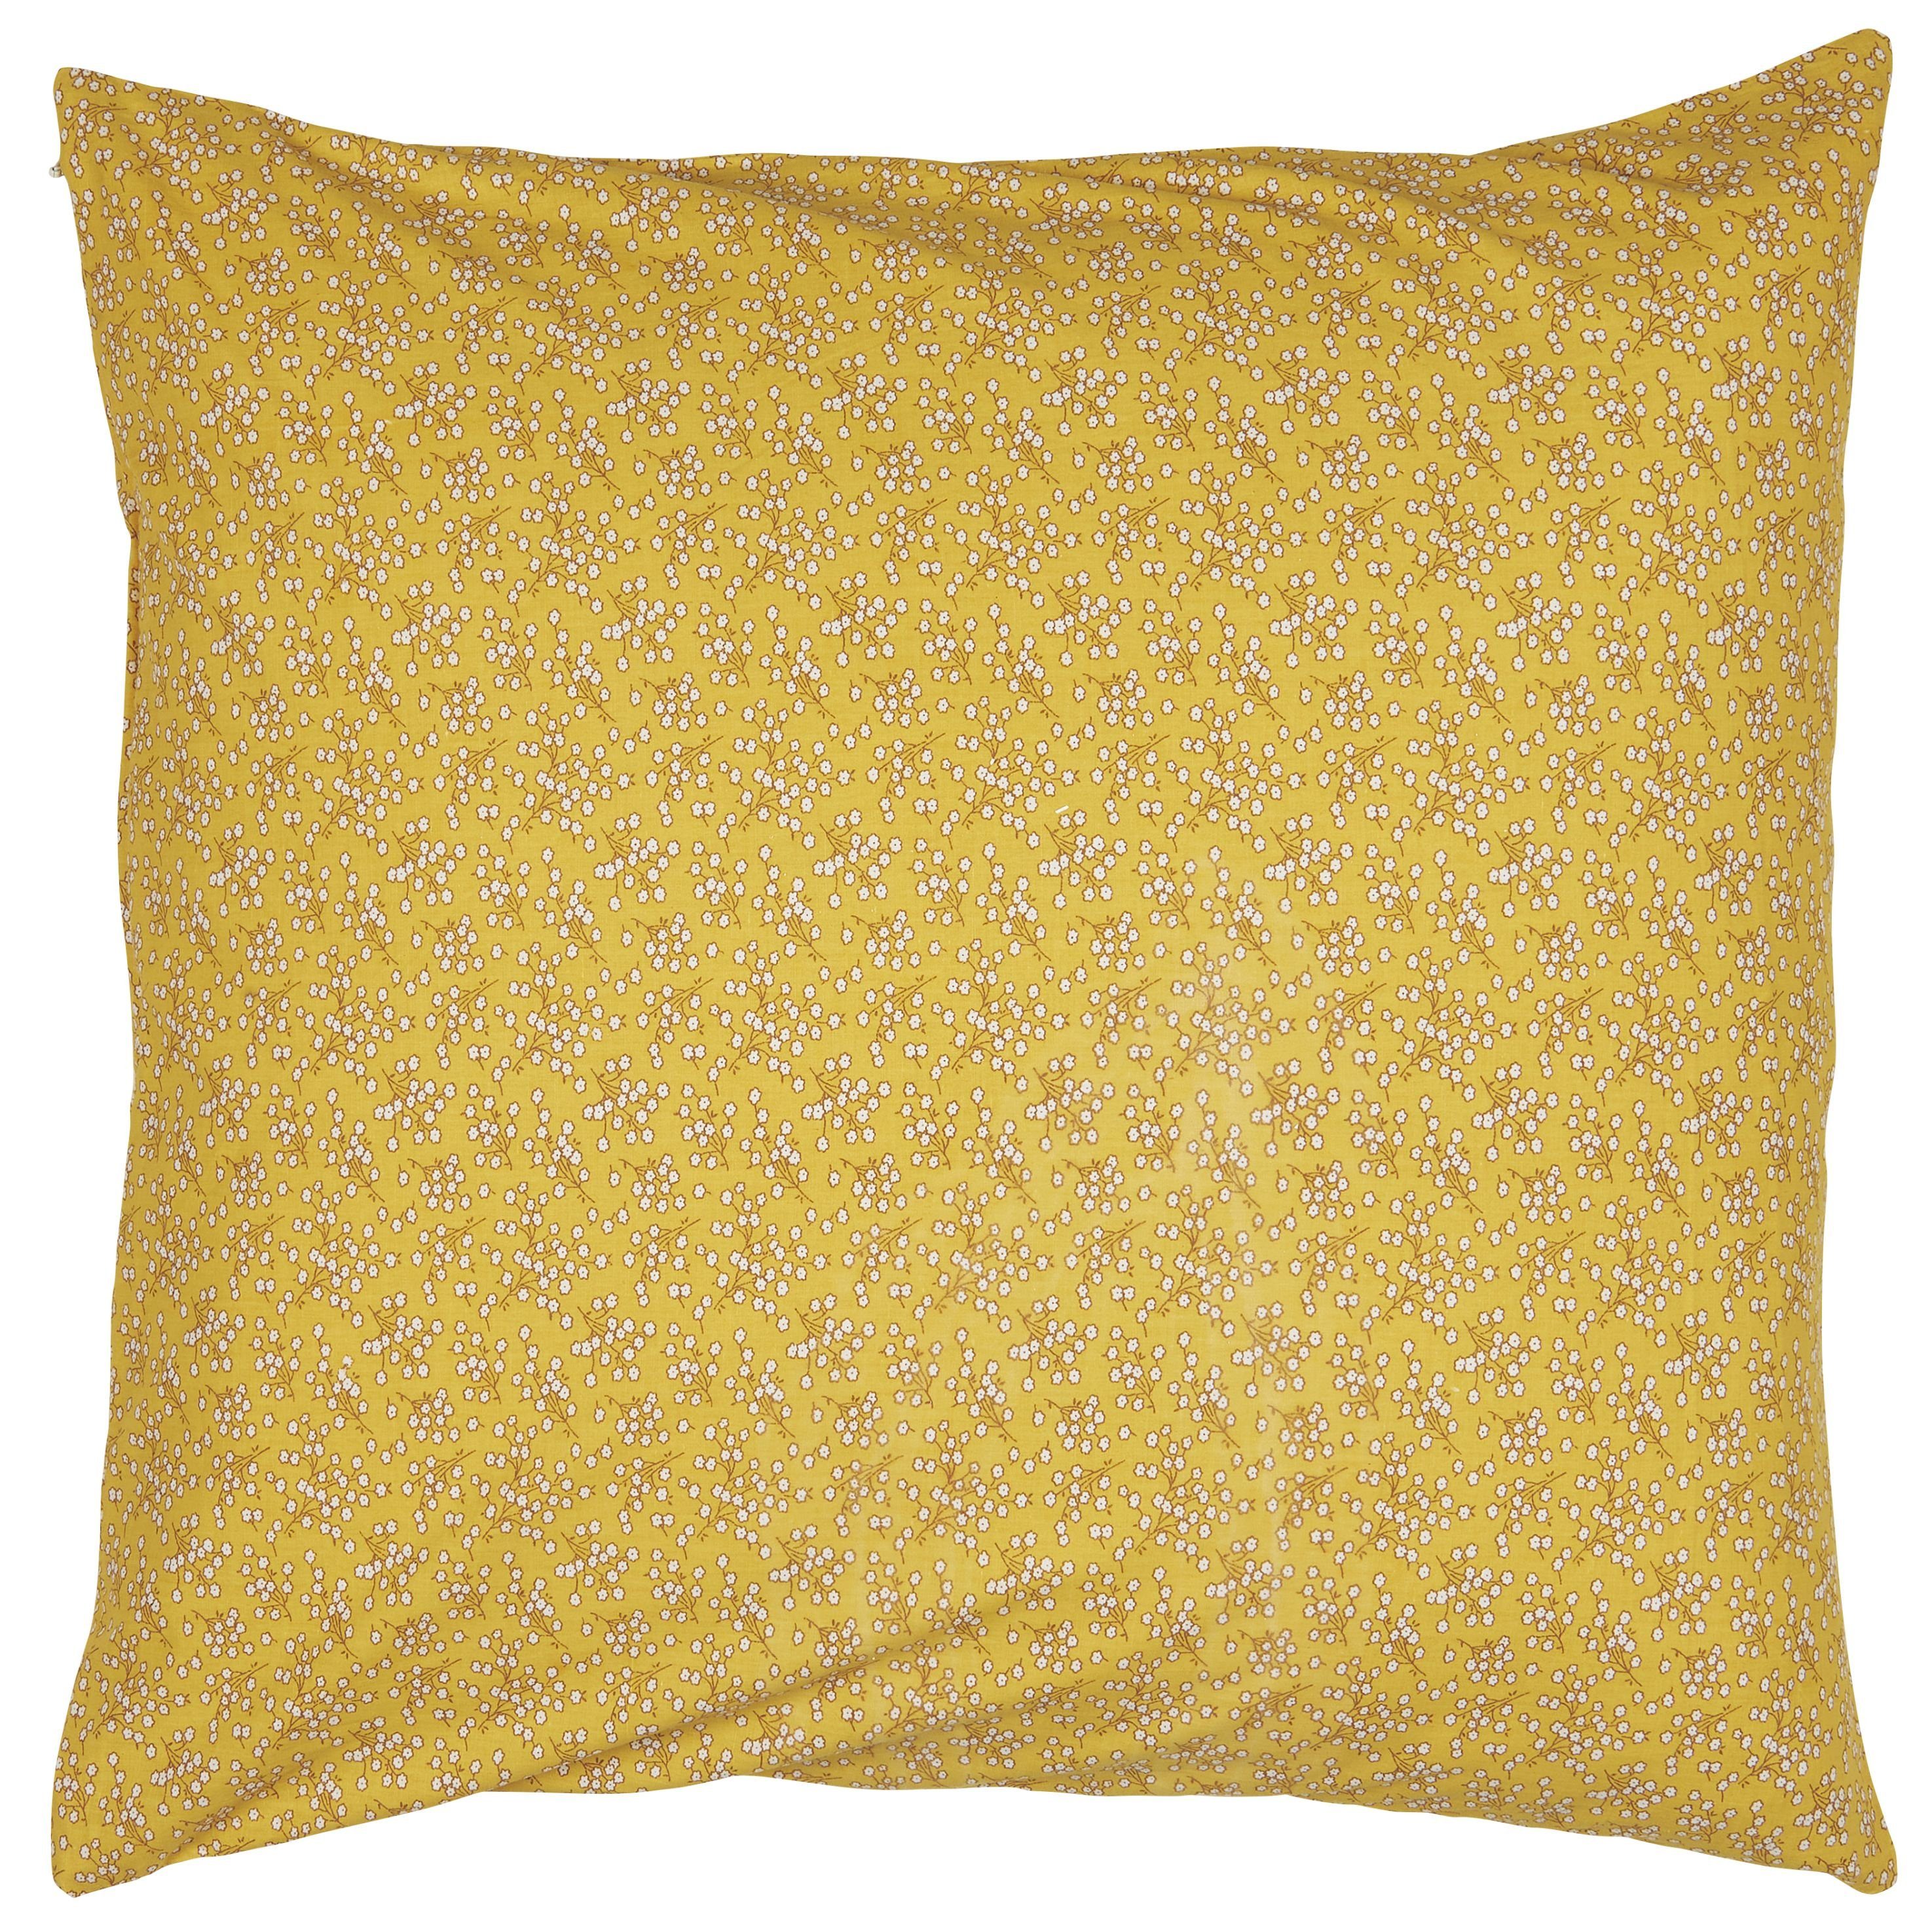 Kissenbezug Kissenbezug Kissenhülle Baumwolle Blumenmuster Gelb Weiß 50x50cm, Ib Laursen